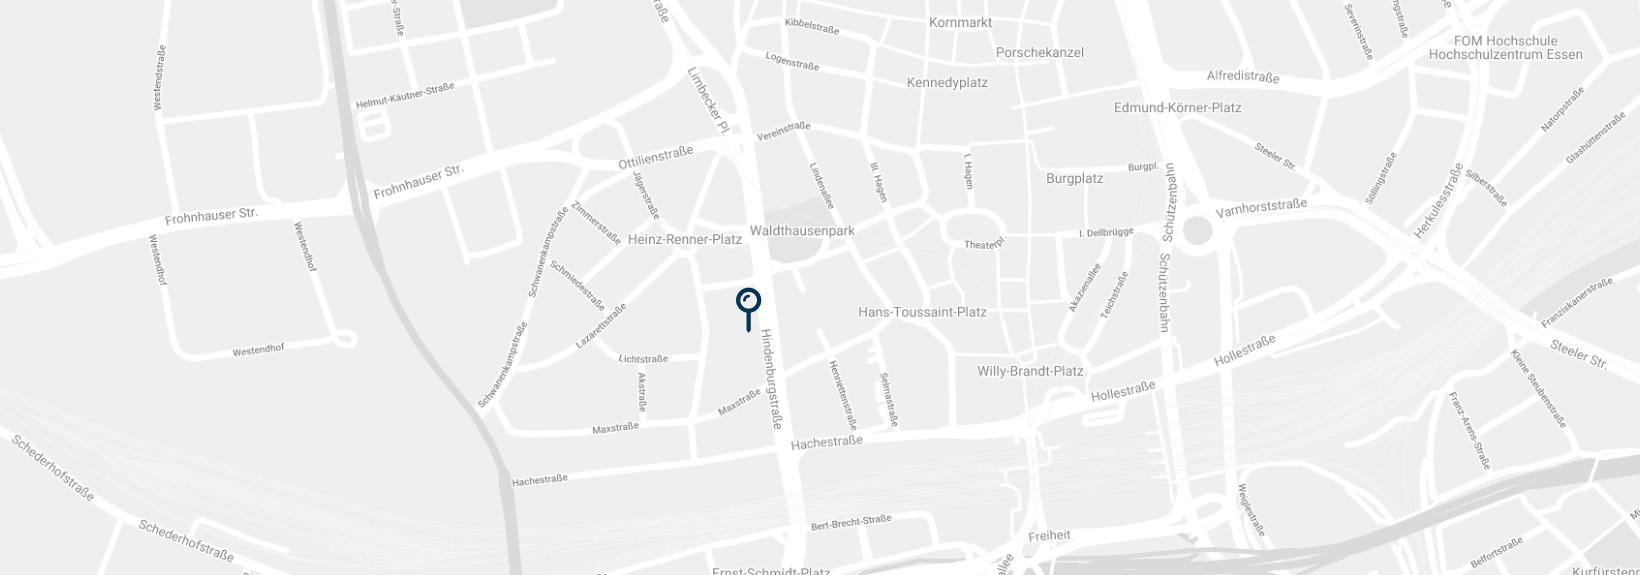 Google Maps – Rückgrat, Hindenburgstr. 23  45127 Essen